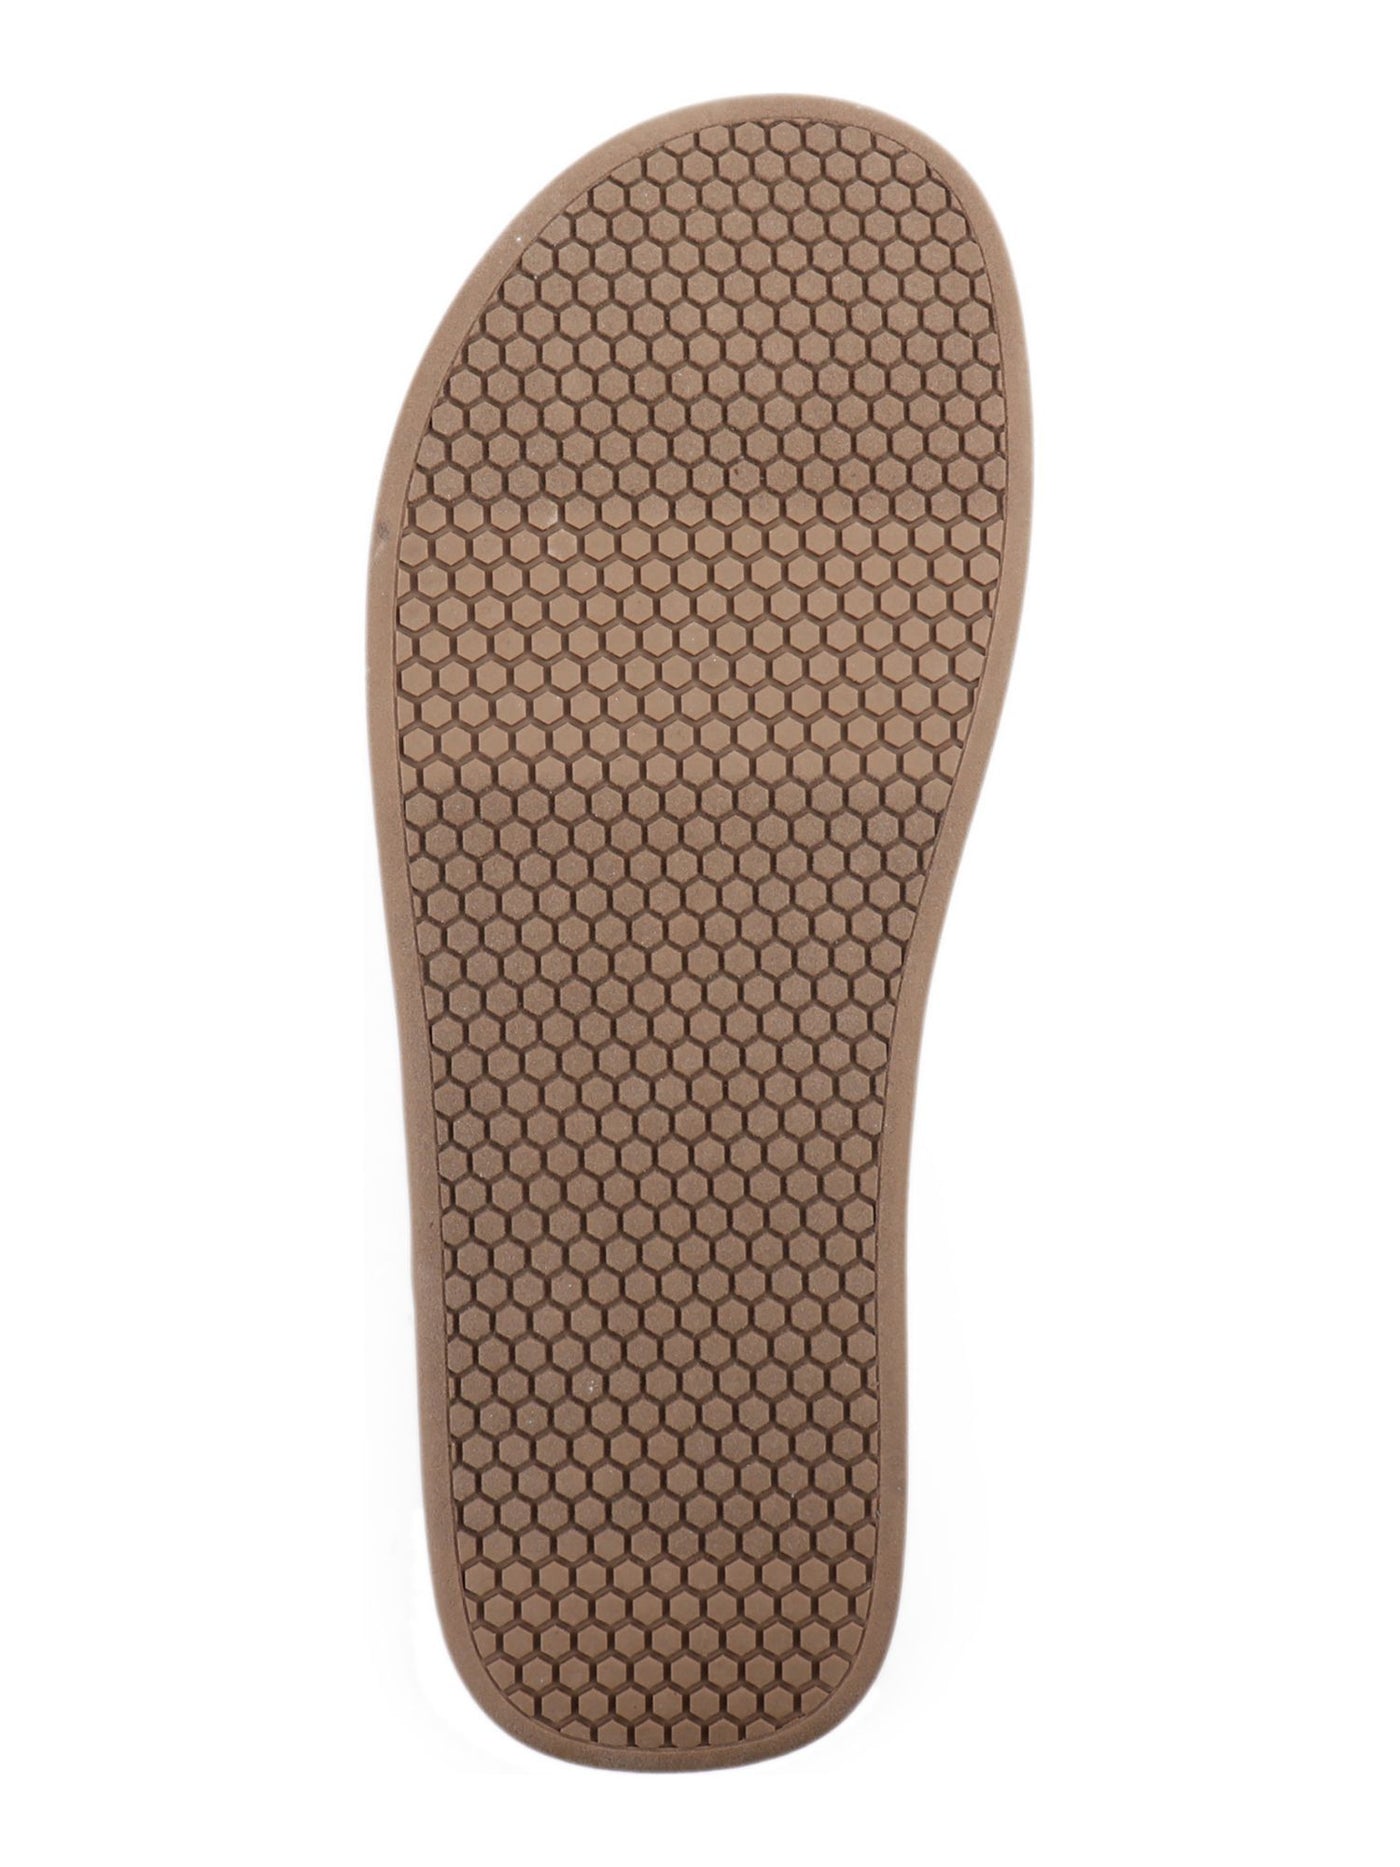 CLUBROOM Mens Coral Printed Padded Riley Round Toe Slip On Flip Flop Sandal 9 M